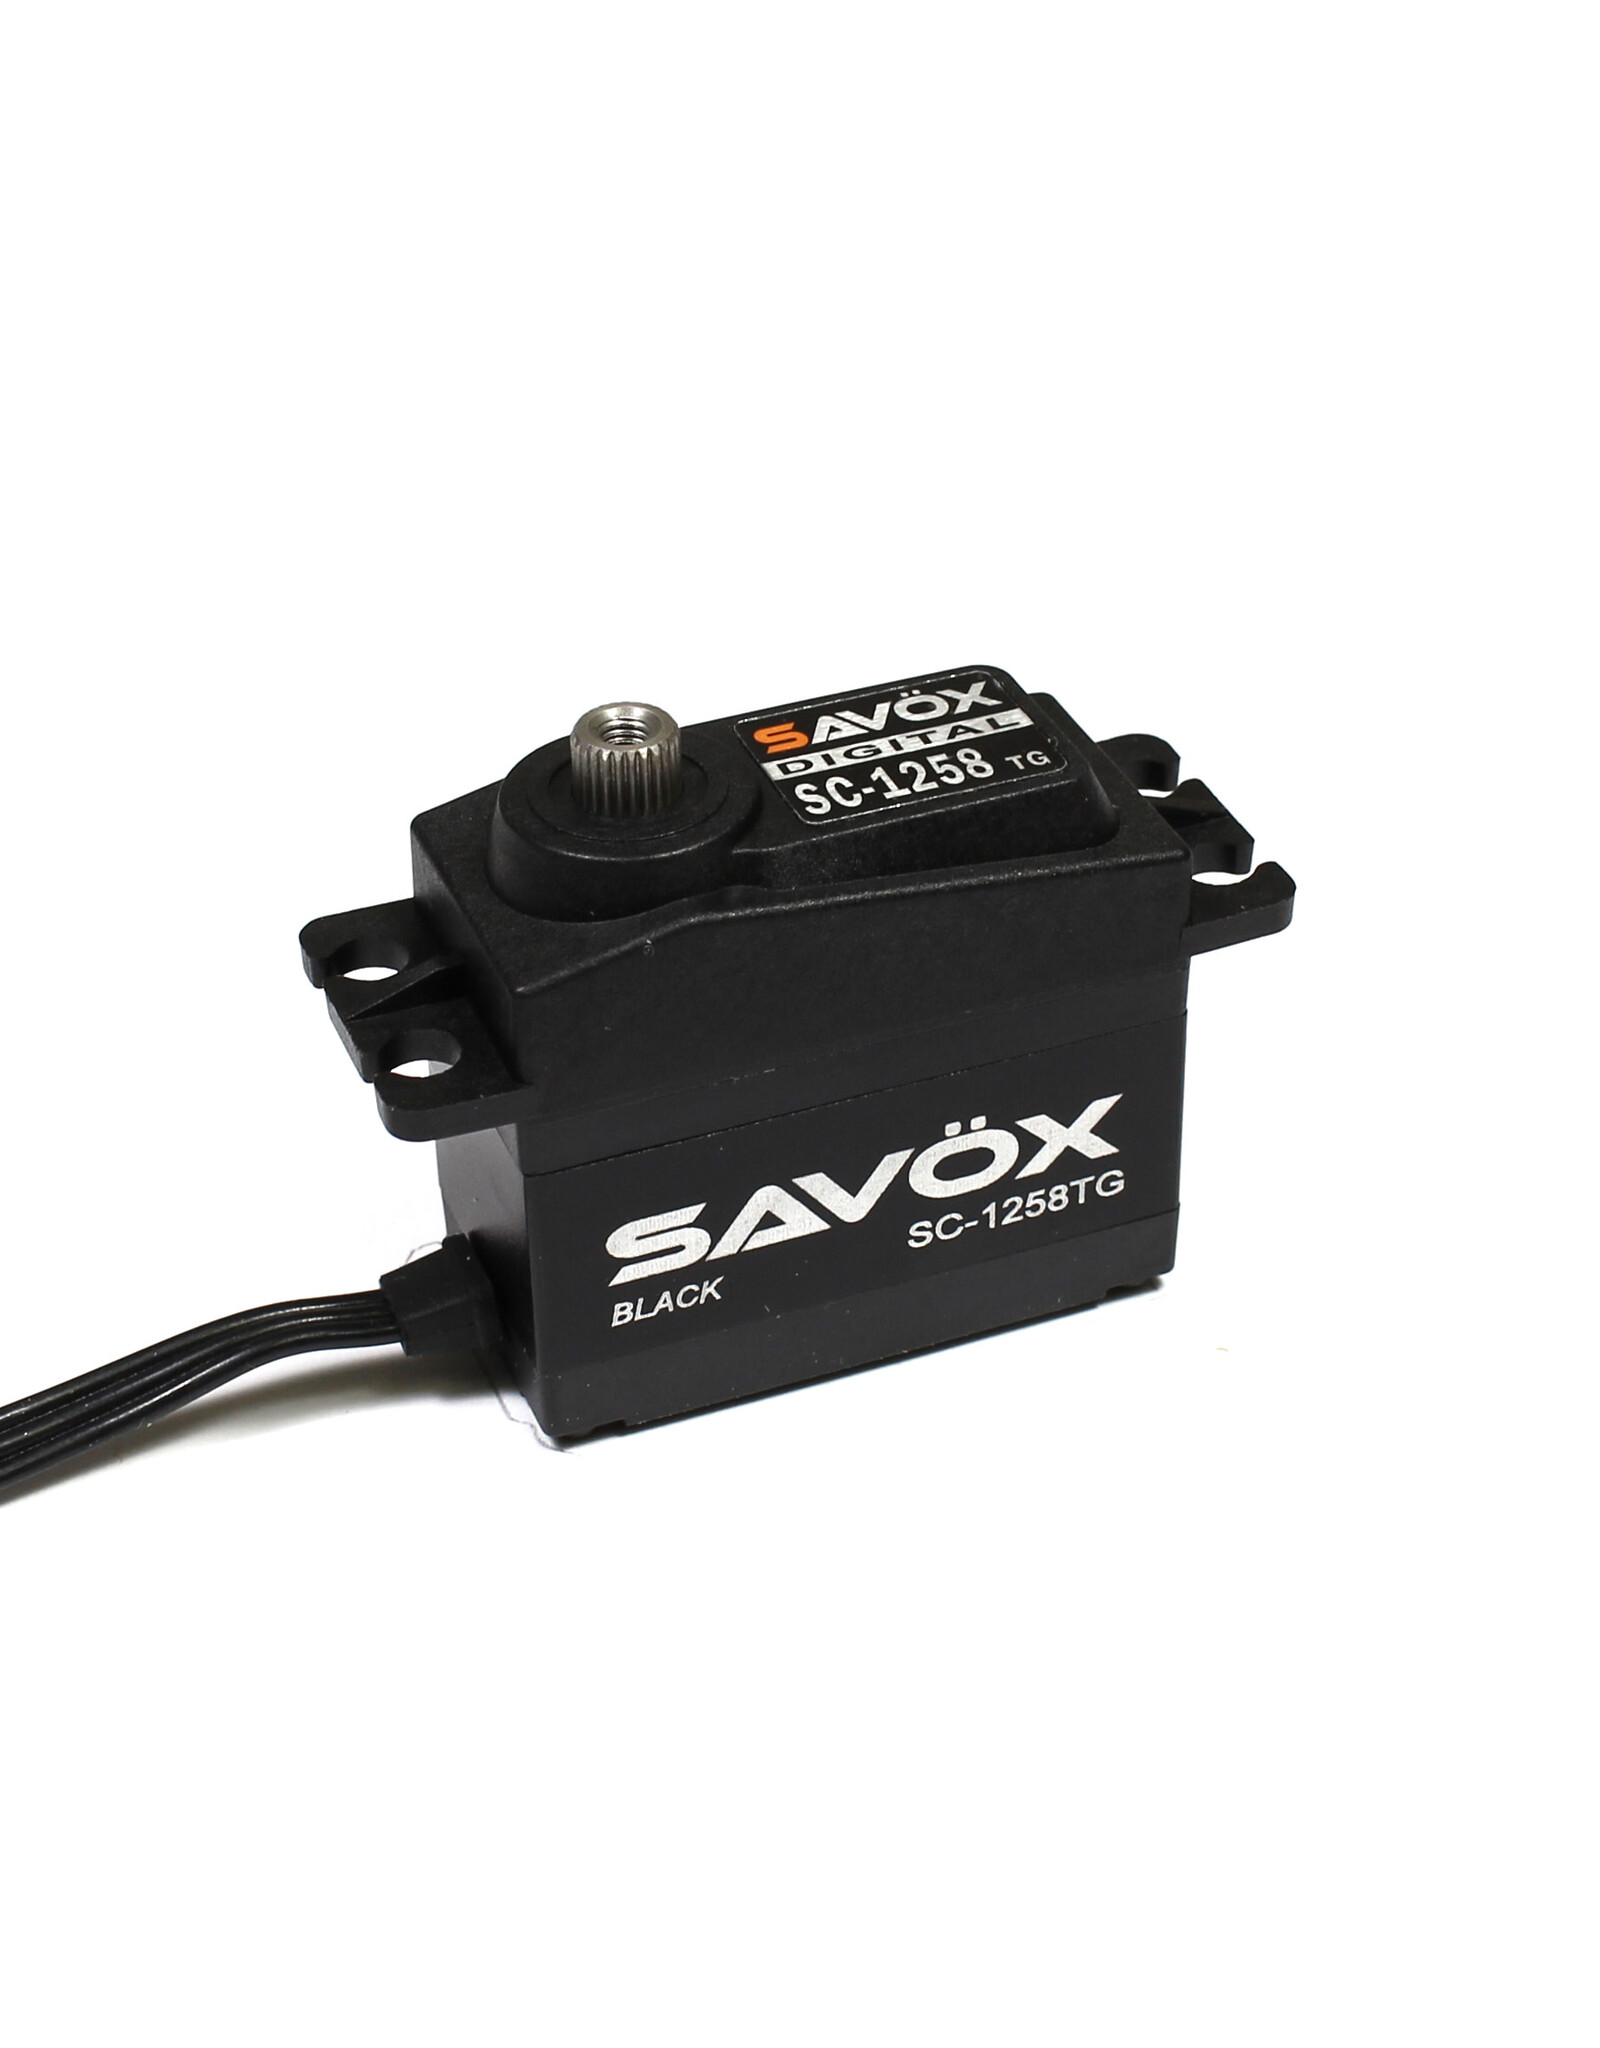 Savox Black Edition, Coreless Digital Servo, 0.08sec / 166oz @ 6V